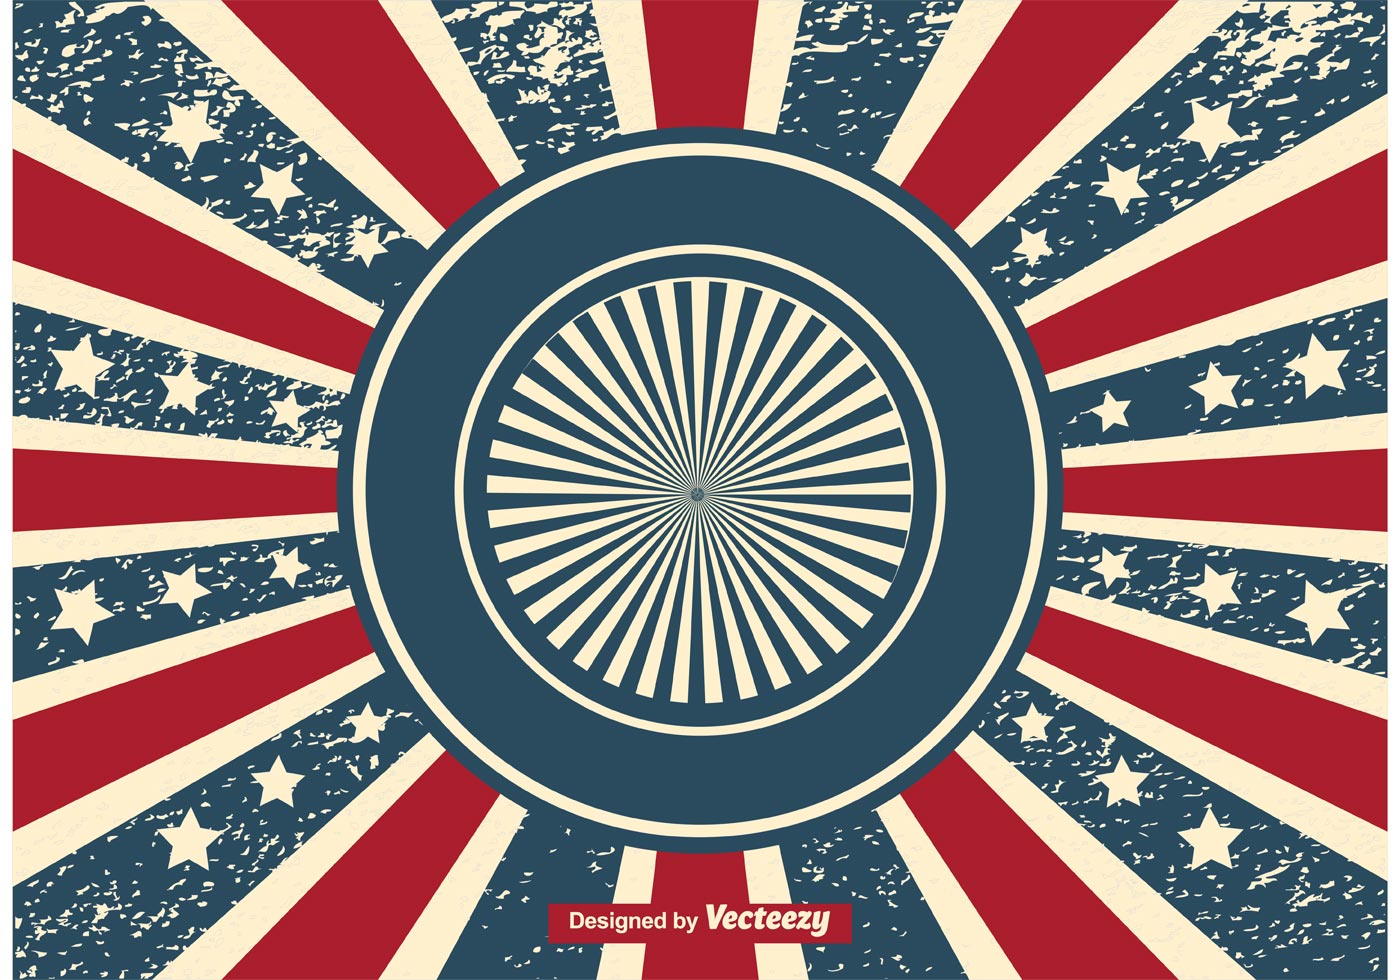 Patriotic Sunburst Grunge Background - Download Free Vector Art, Stock